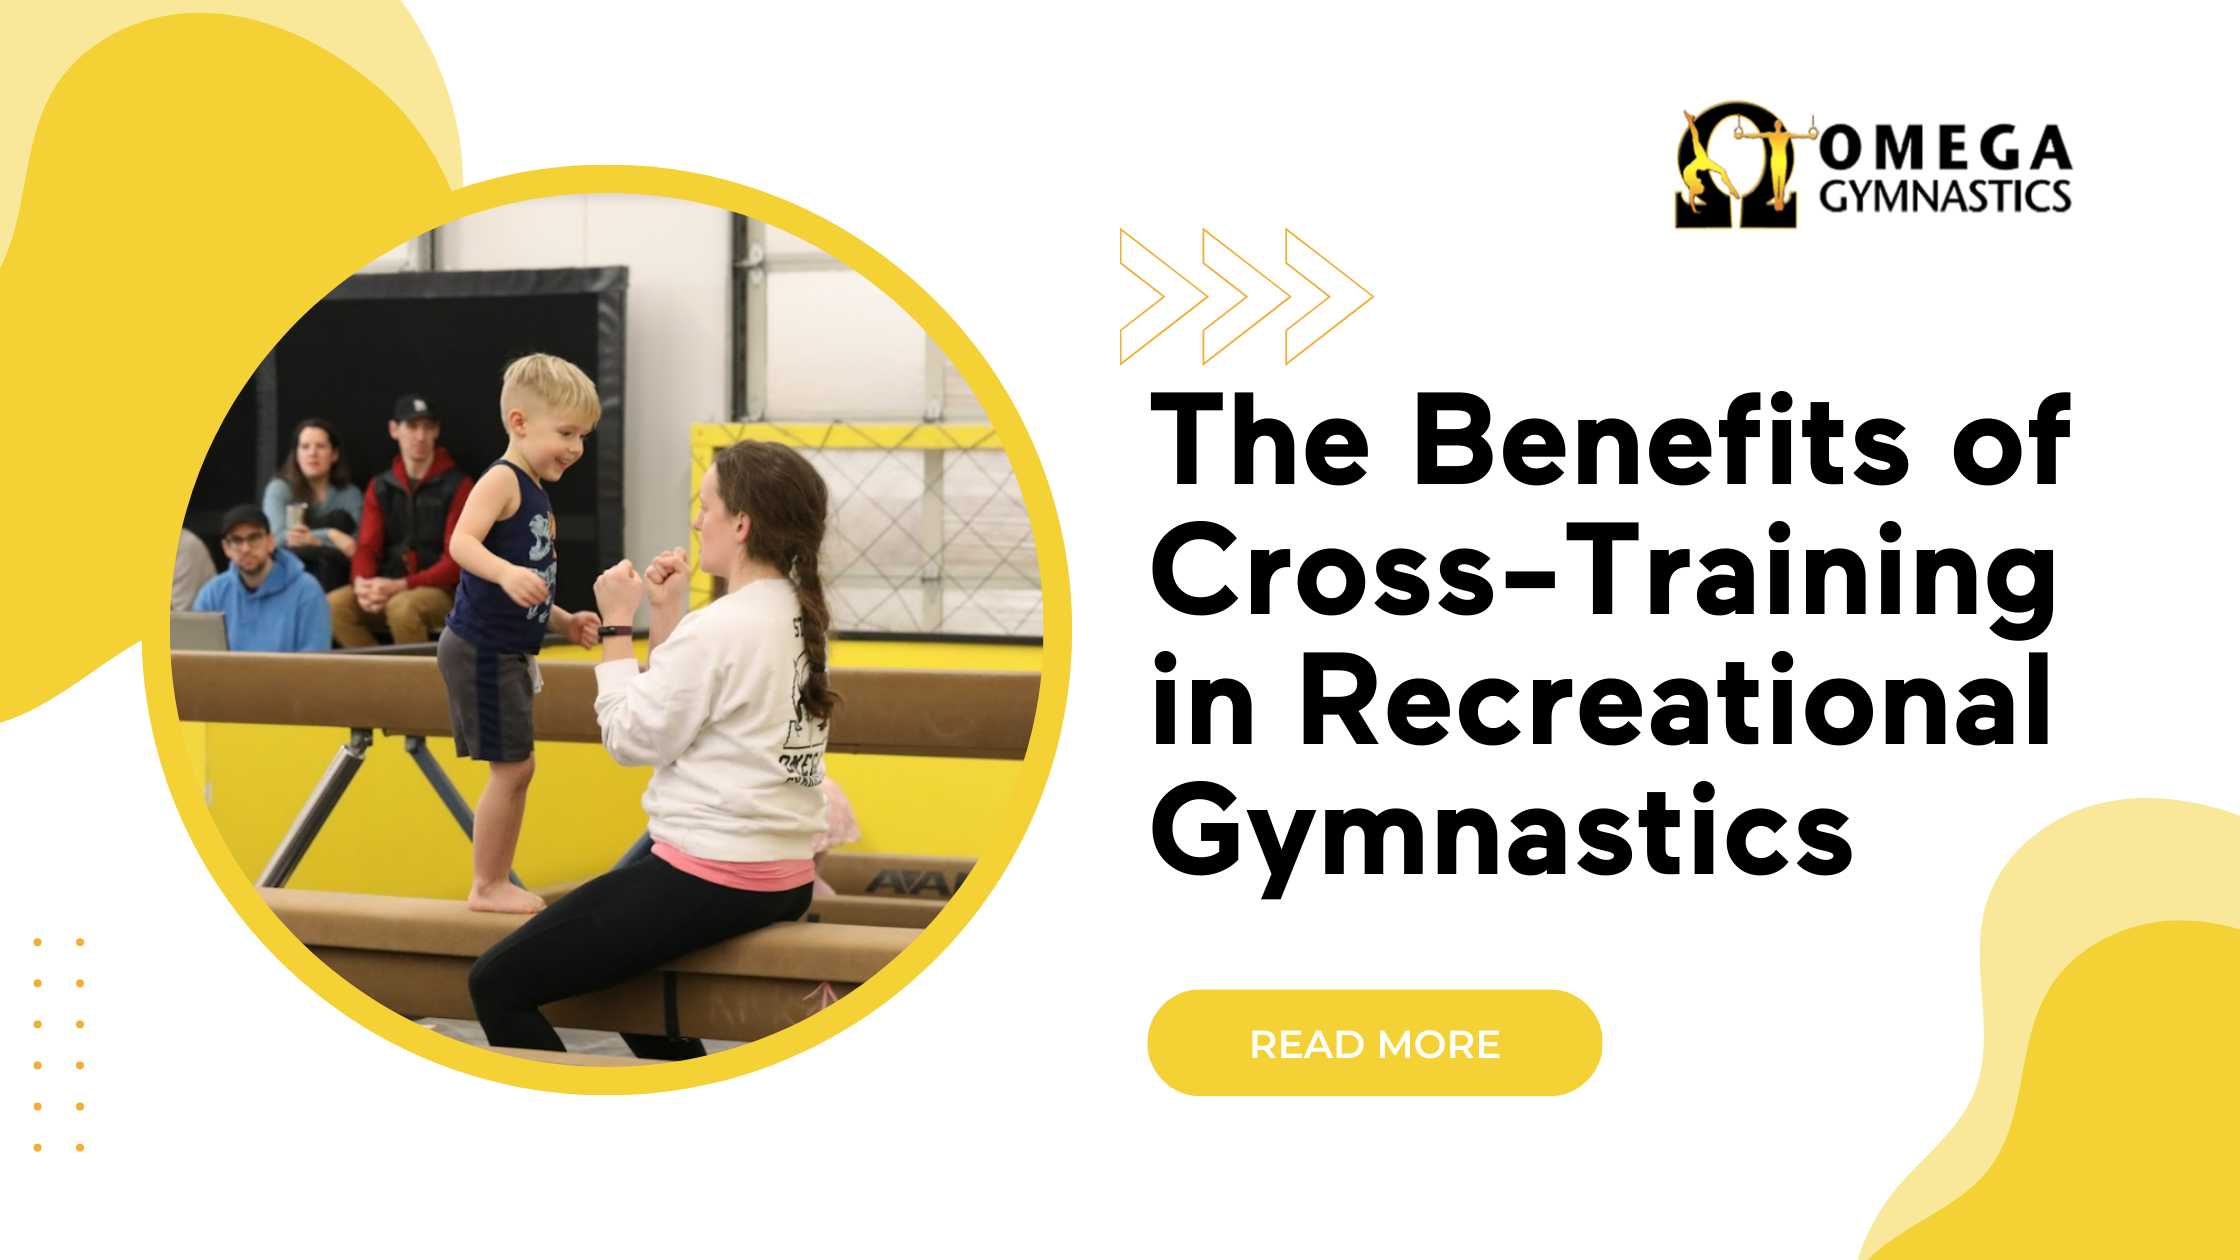 The Benefits of Cross-Training in Recreational Gymnastics